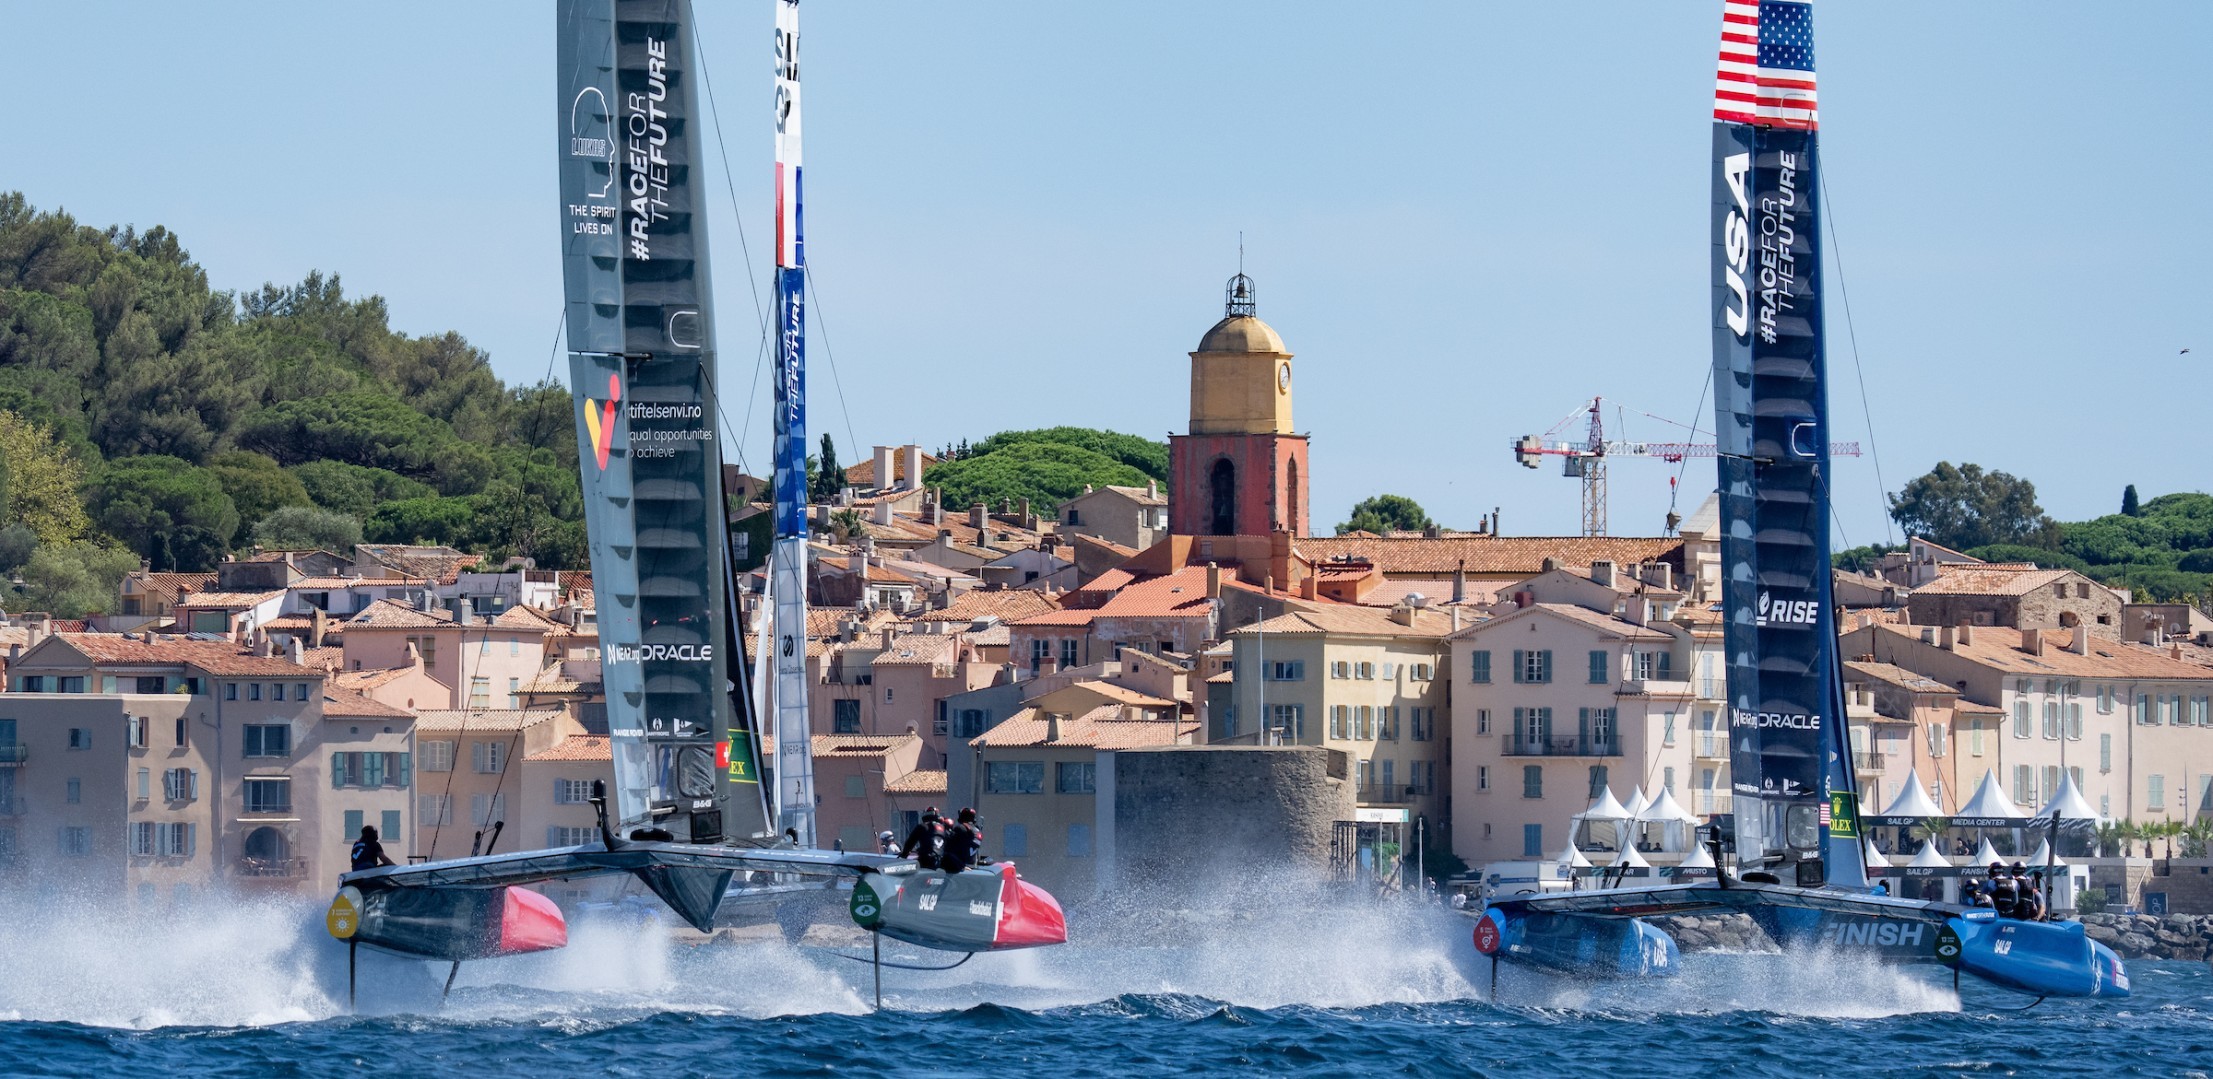 Scene set for high-speed SailGP showdown in Saint-Tropez